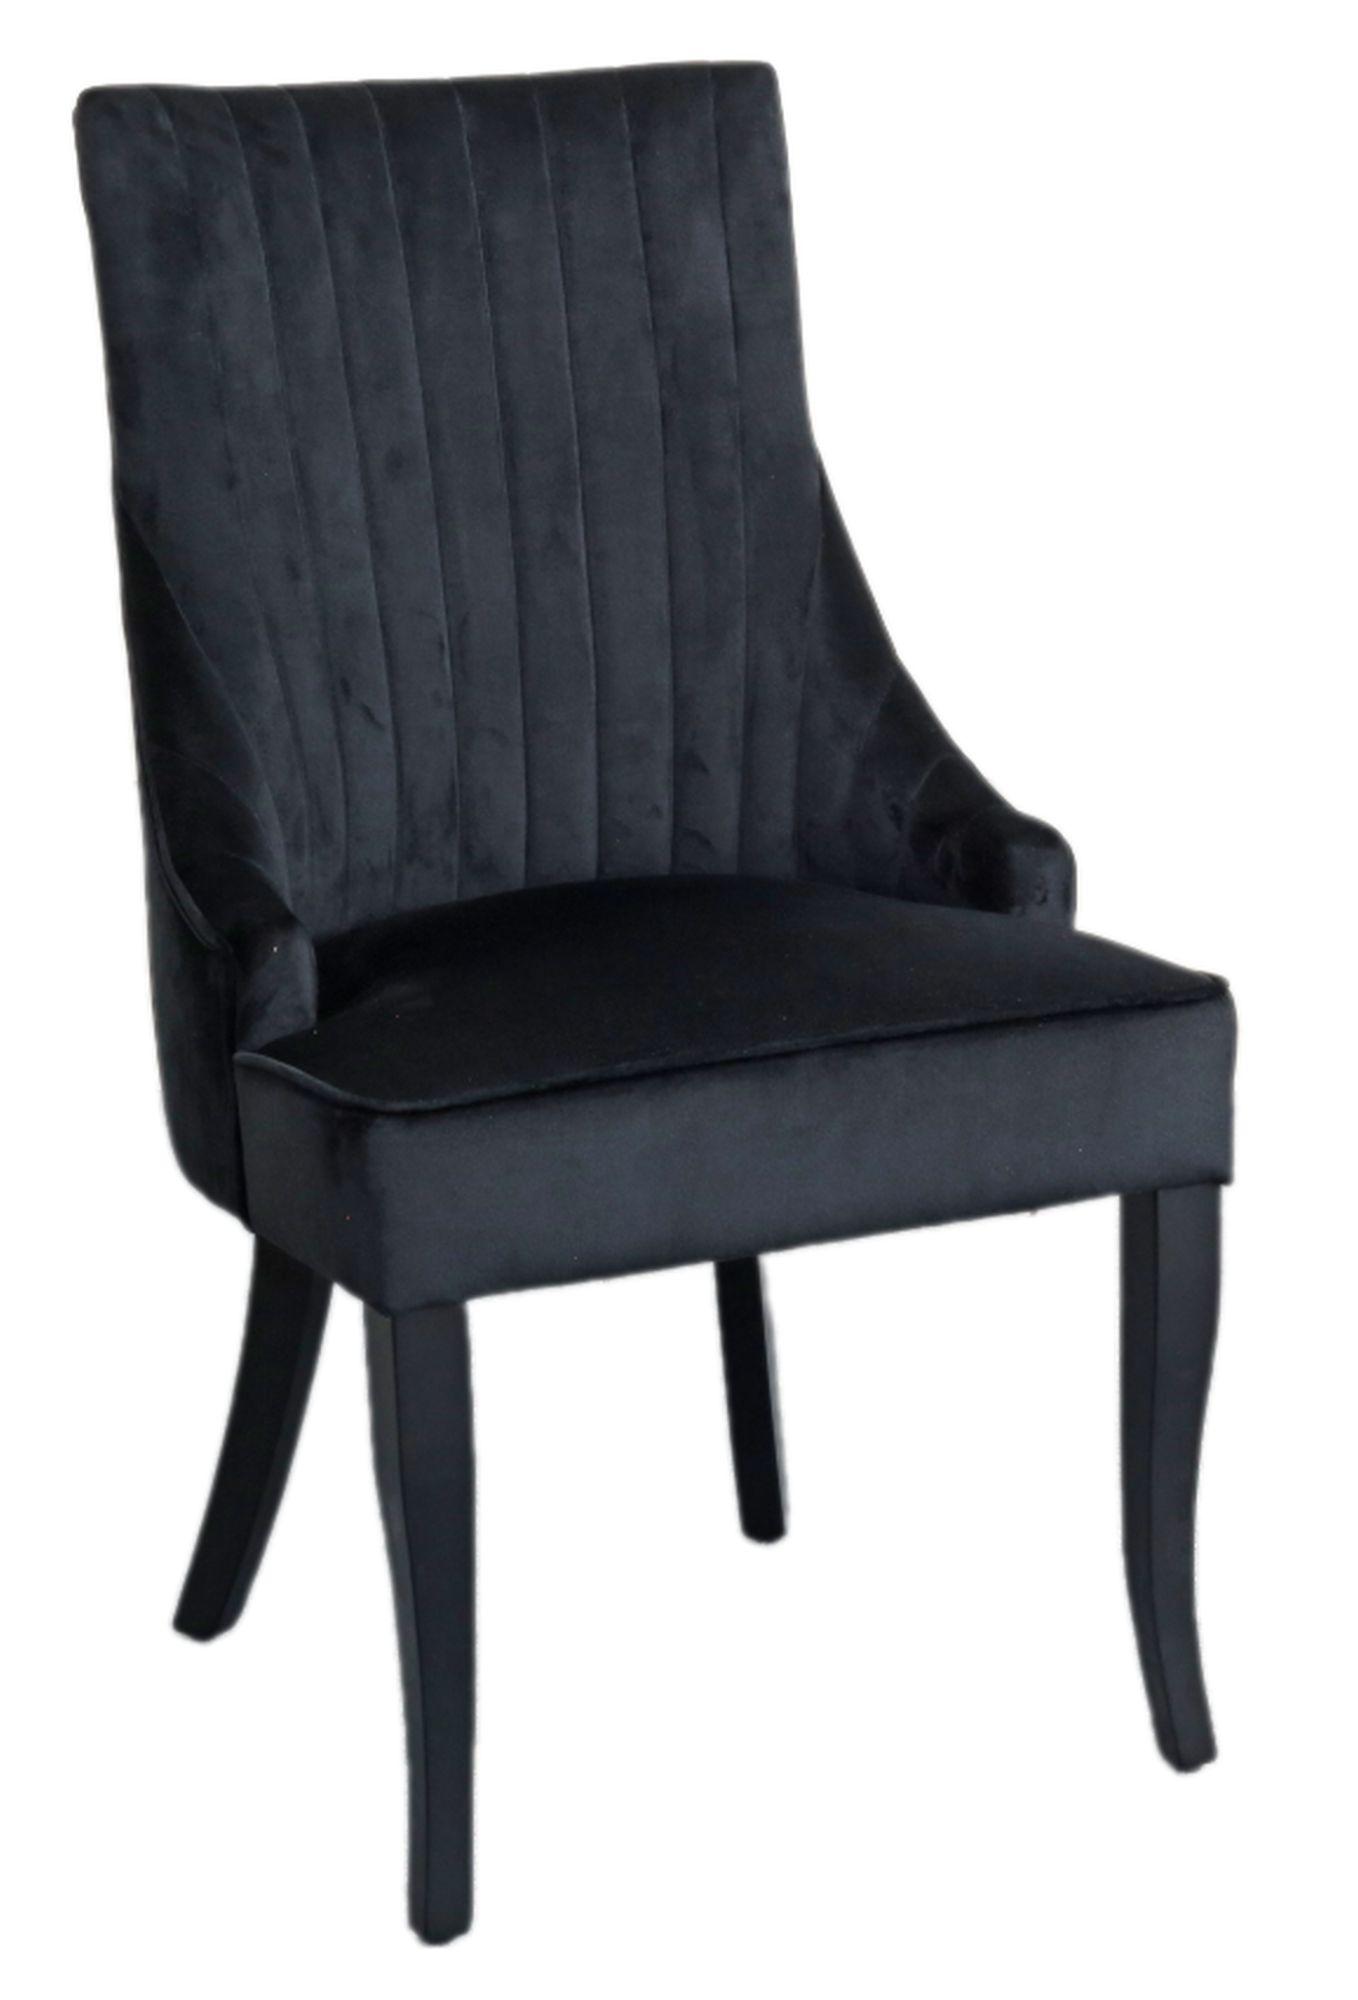 Sofie Black Dining Chair, Tufted Velvet Fabric Upholstered with Black Wooden Legs